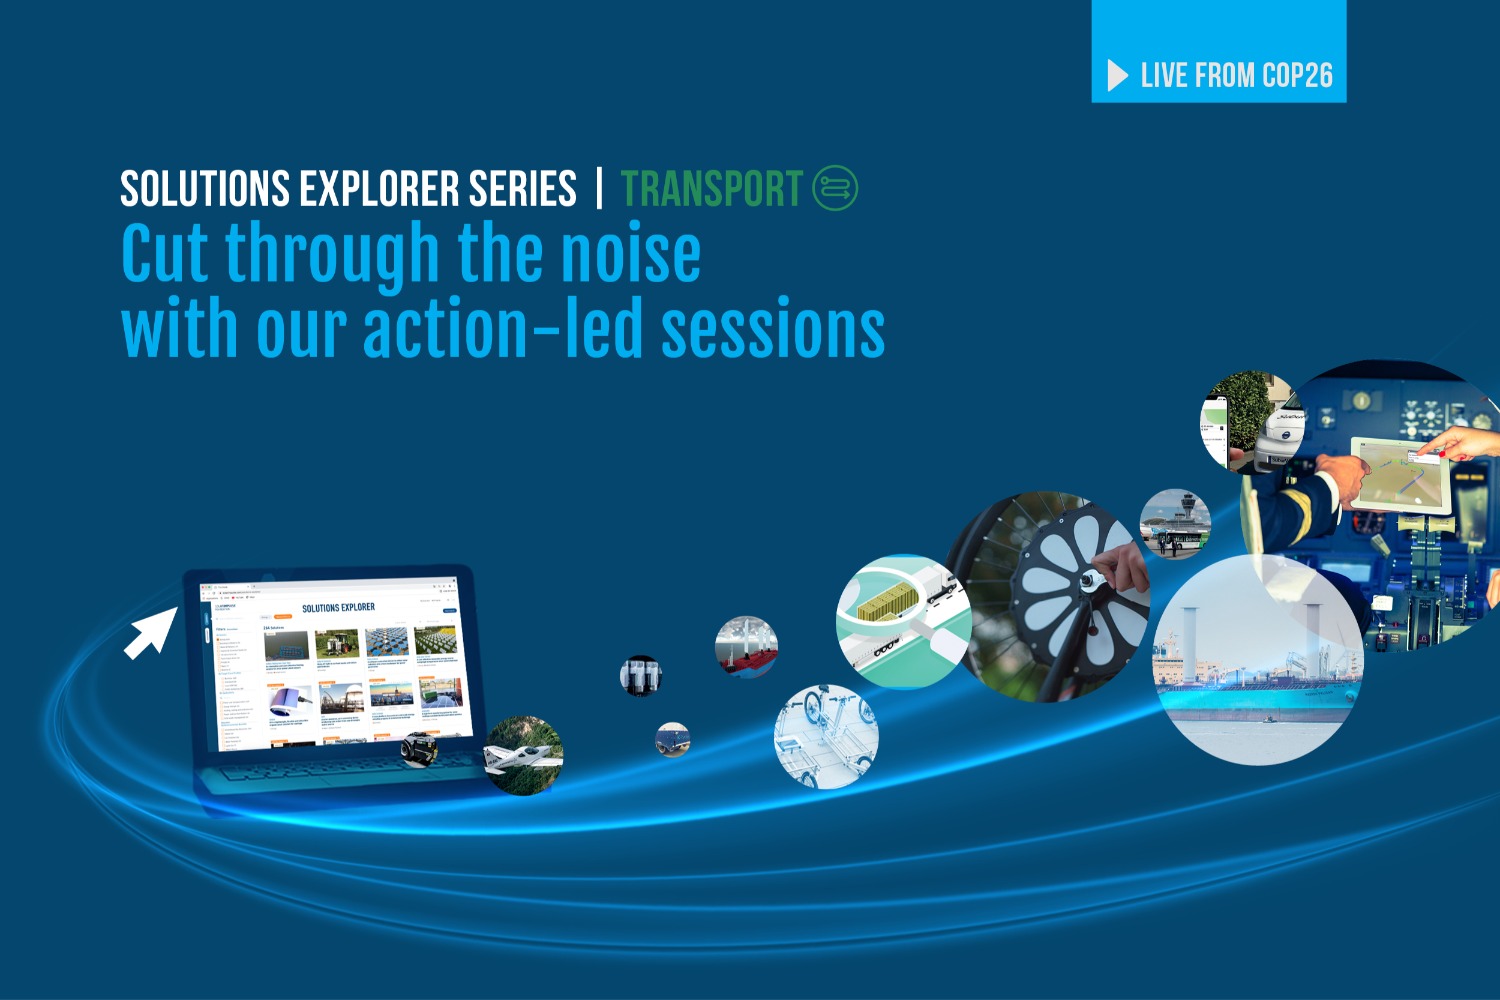 The Solutions Explorer Series - Transporte